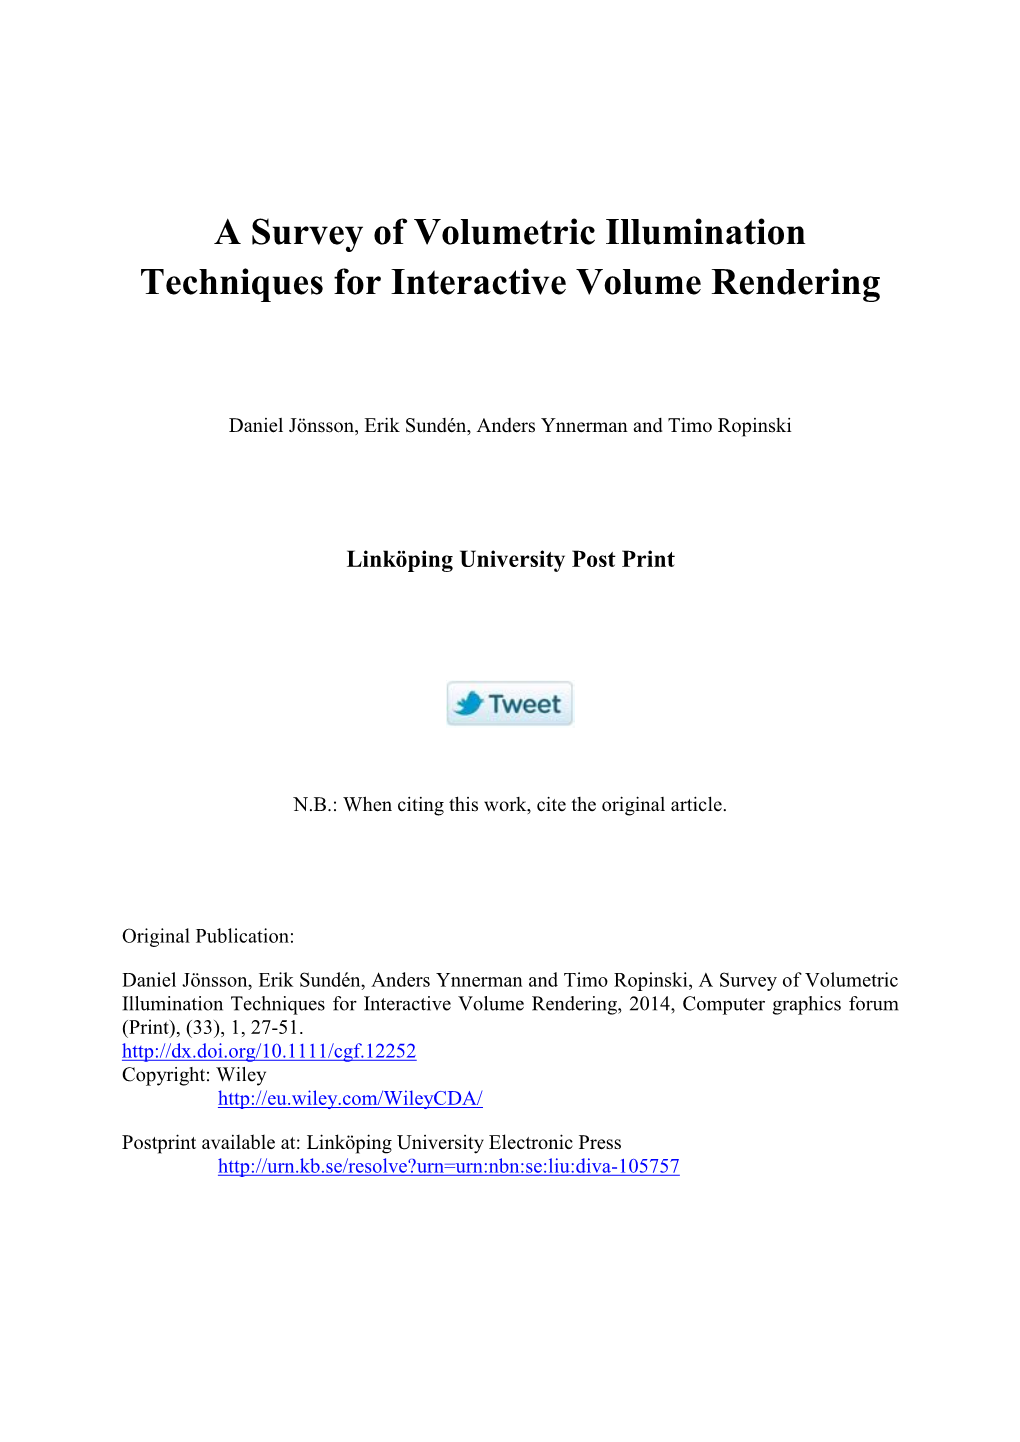 A Survey of Volumetric Illumination Techniques for Interactive Volume Rendering